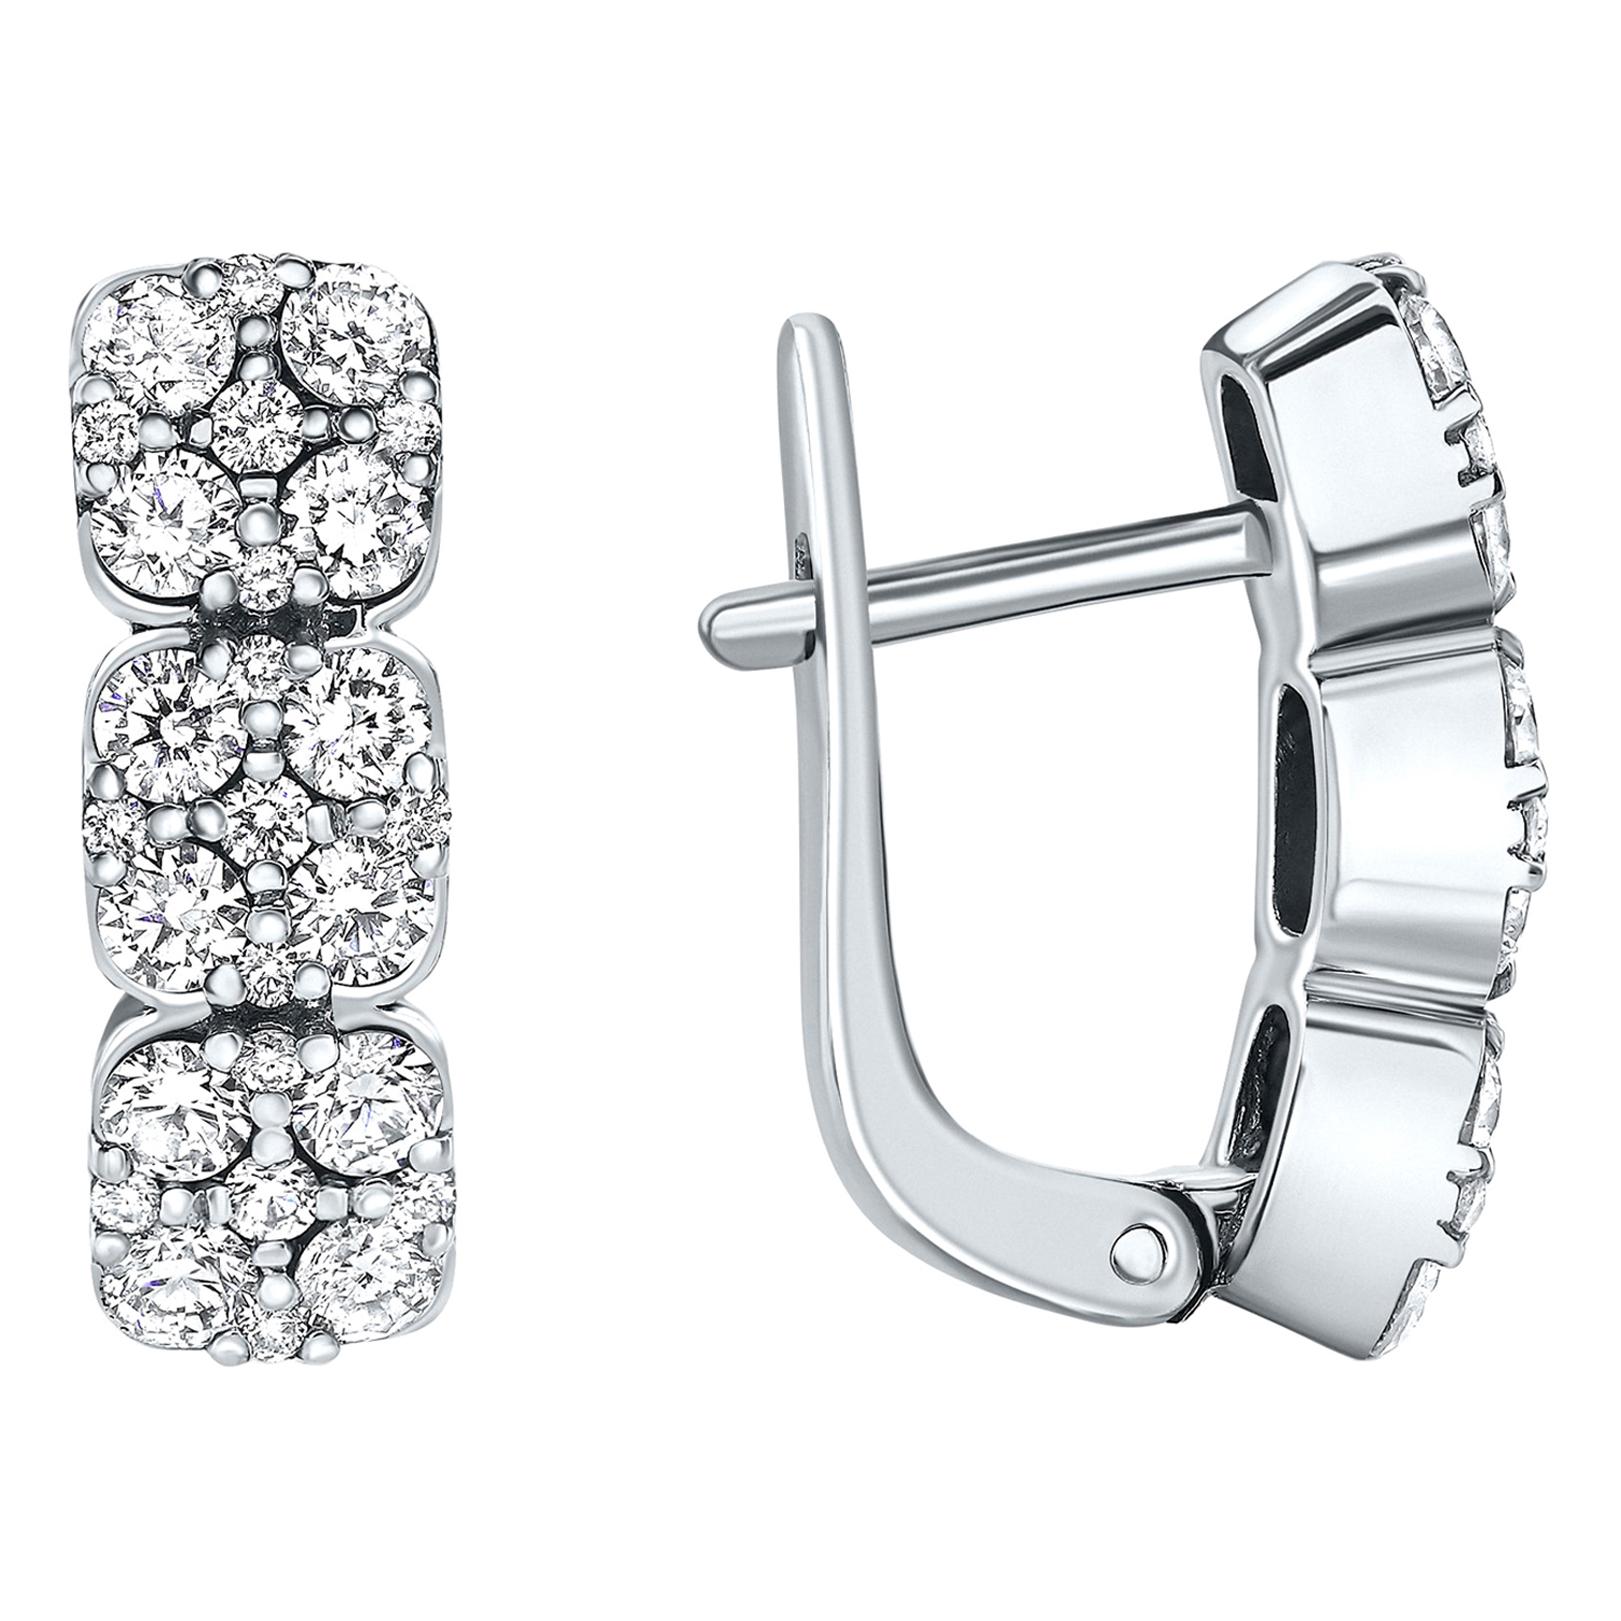 1.19 Carat Round Diamond Earrings in 14k White Gold - Shlomit Rogel For Sale